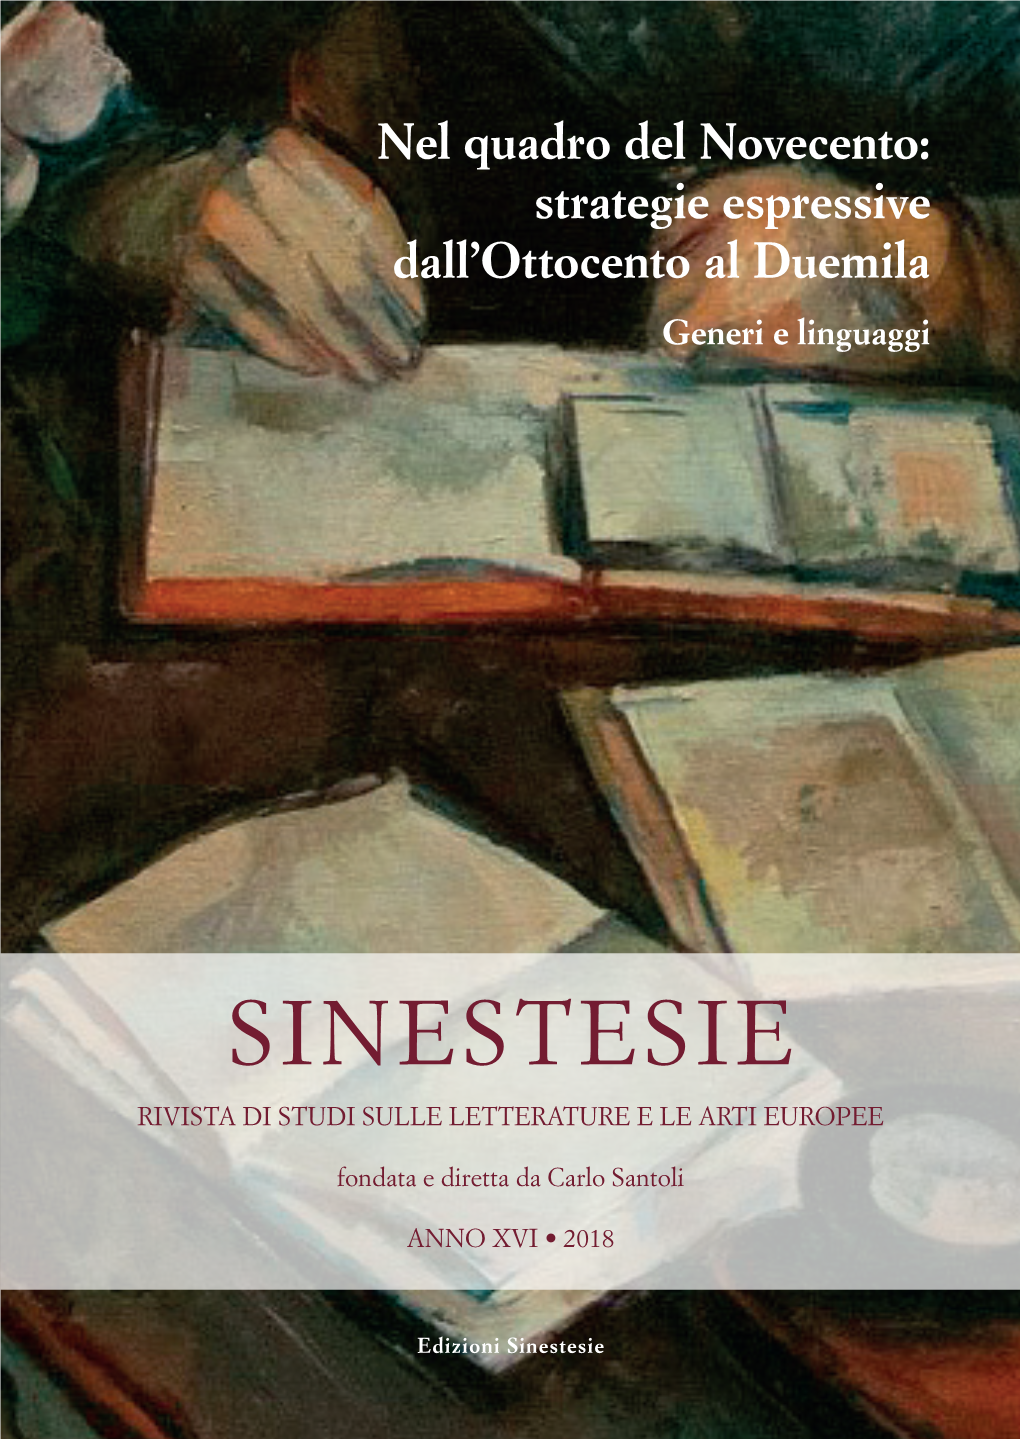 Sinestesie, XVI(2018)